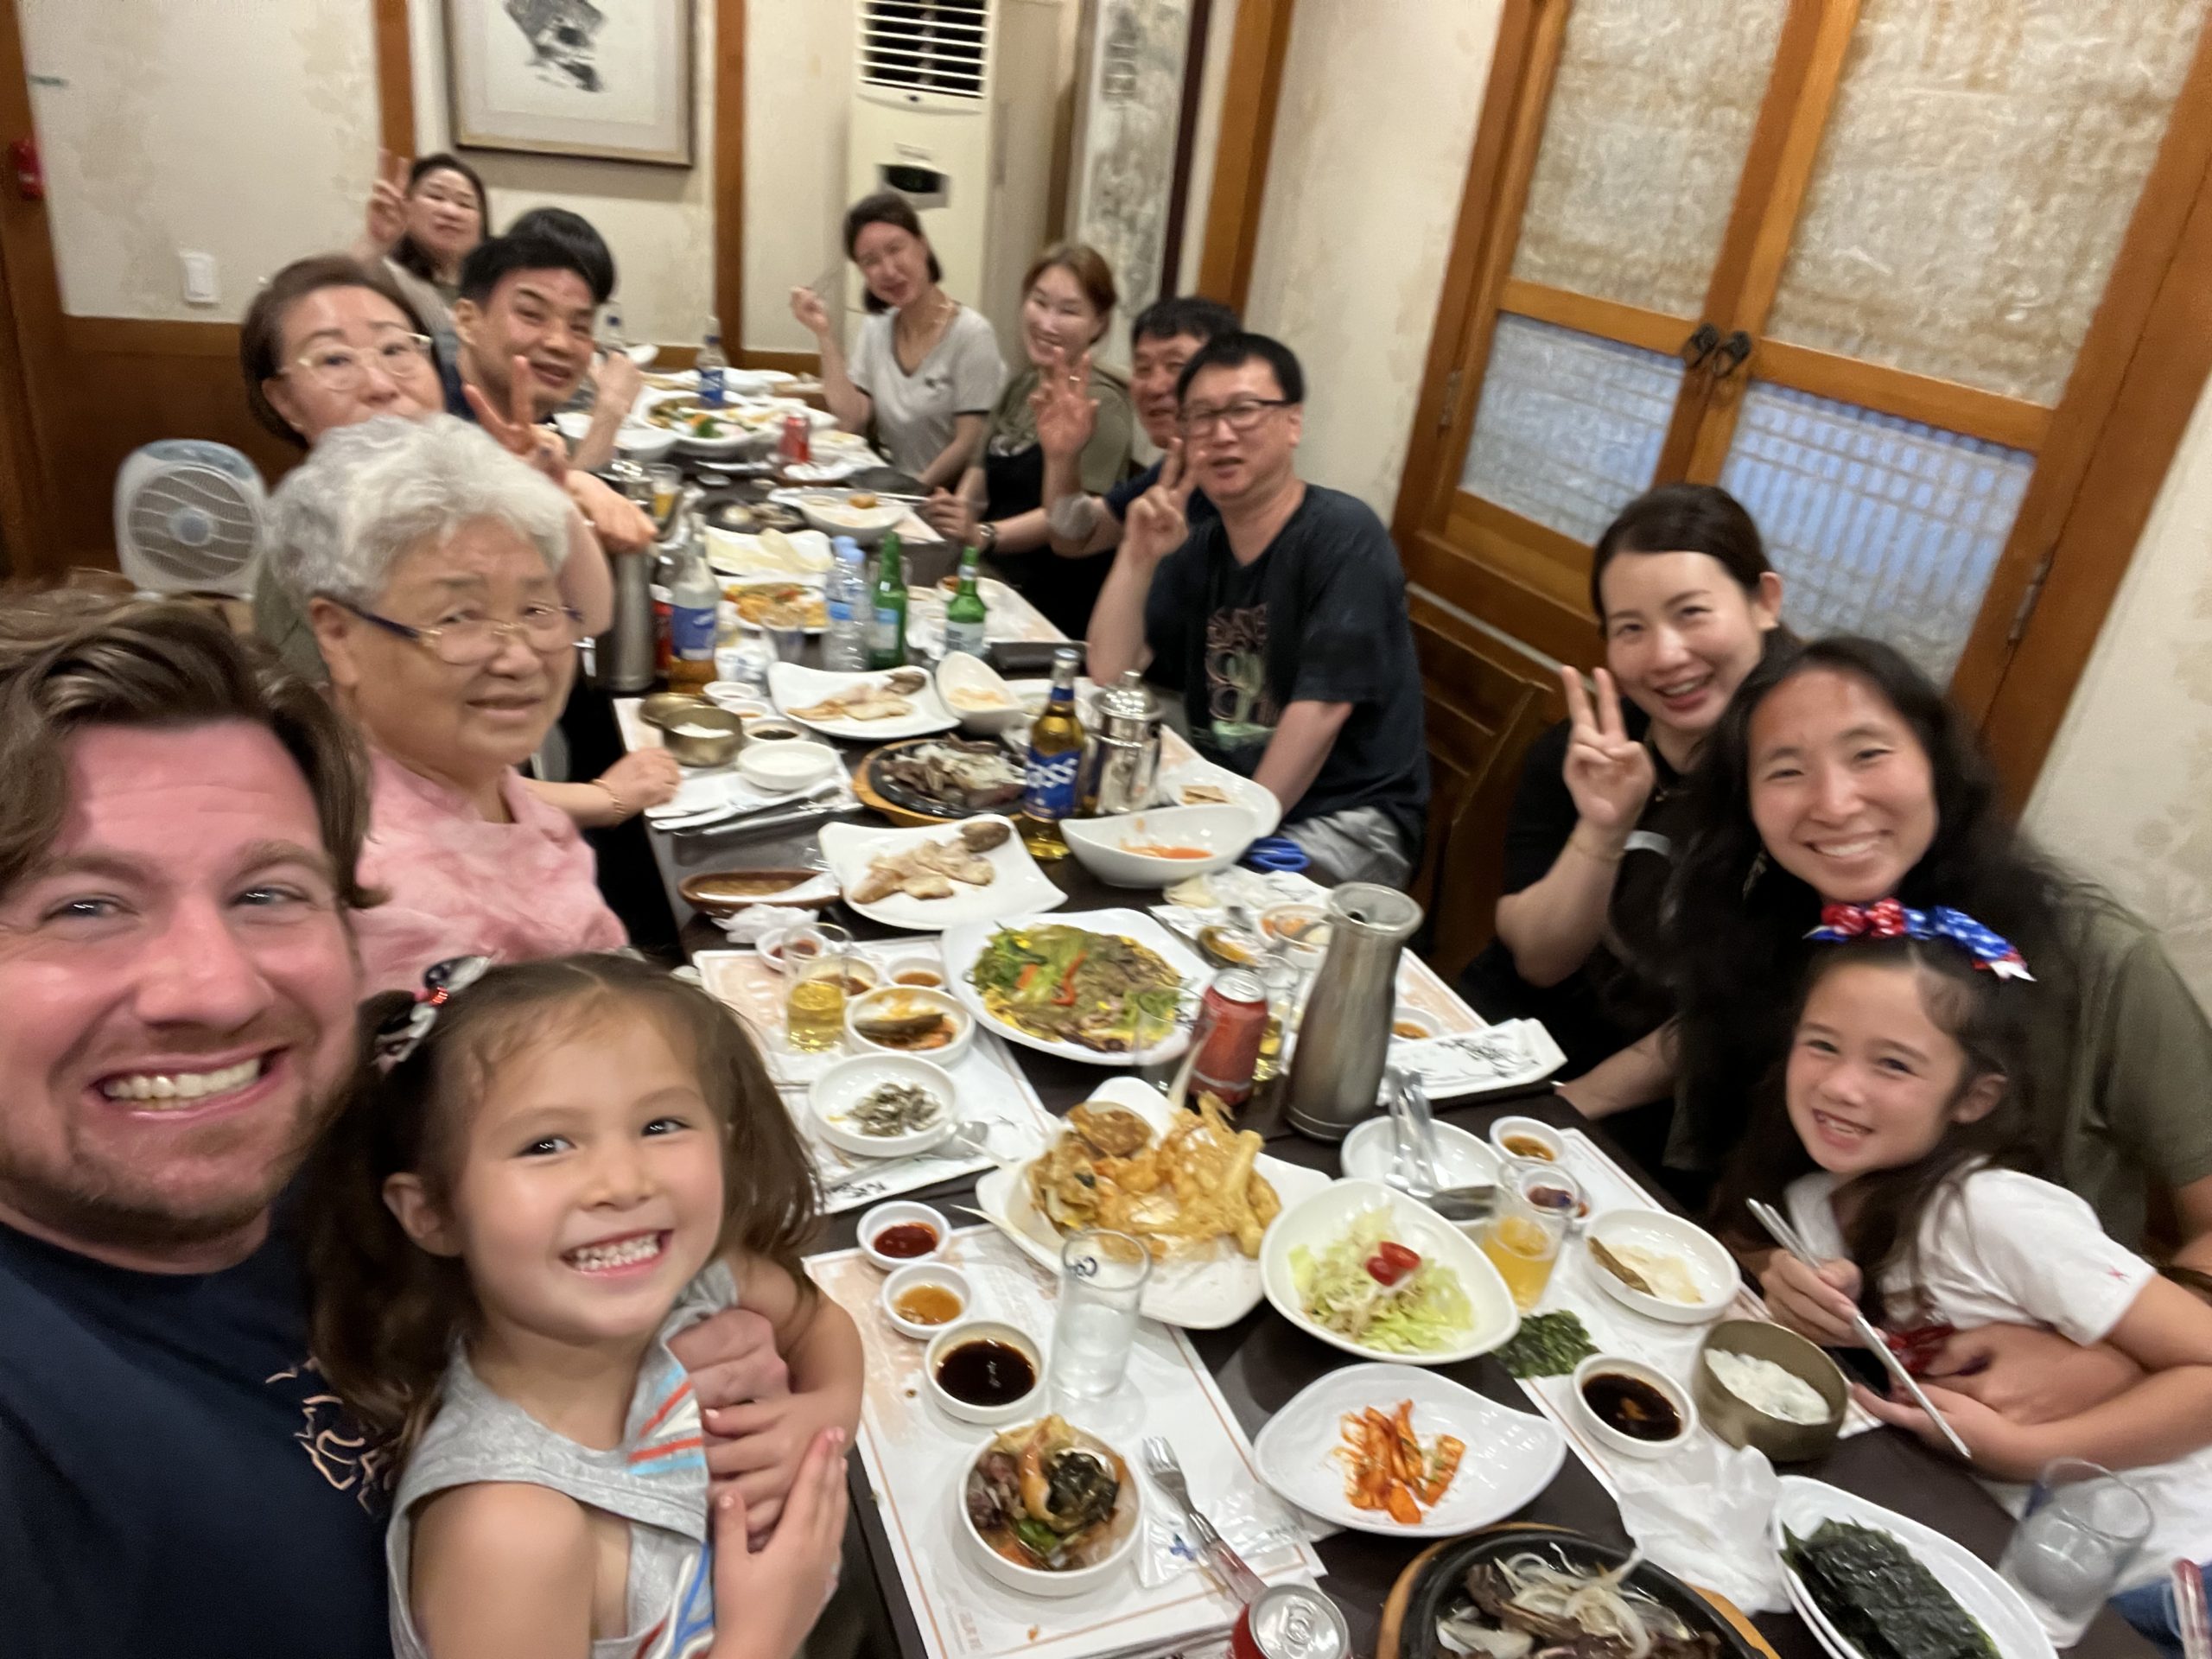 South Korea Trip #3-5: Reunited with Meghannn’s birth family